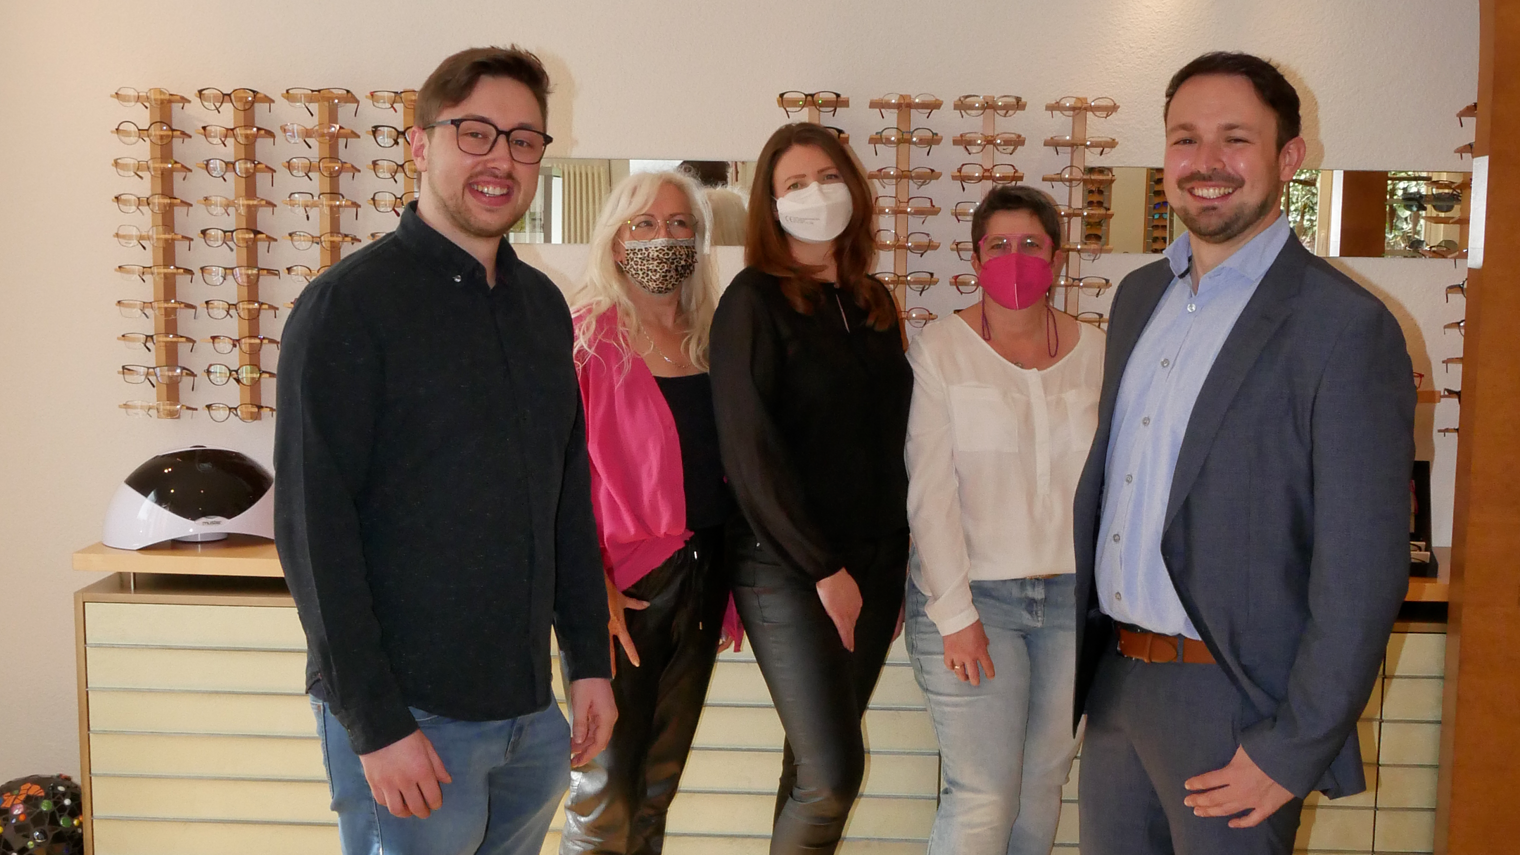 Augenoptikermeister Kowalski mit Teams und Berater Felix Keller